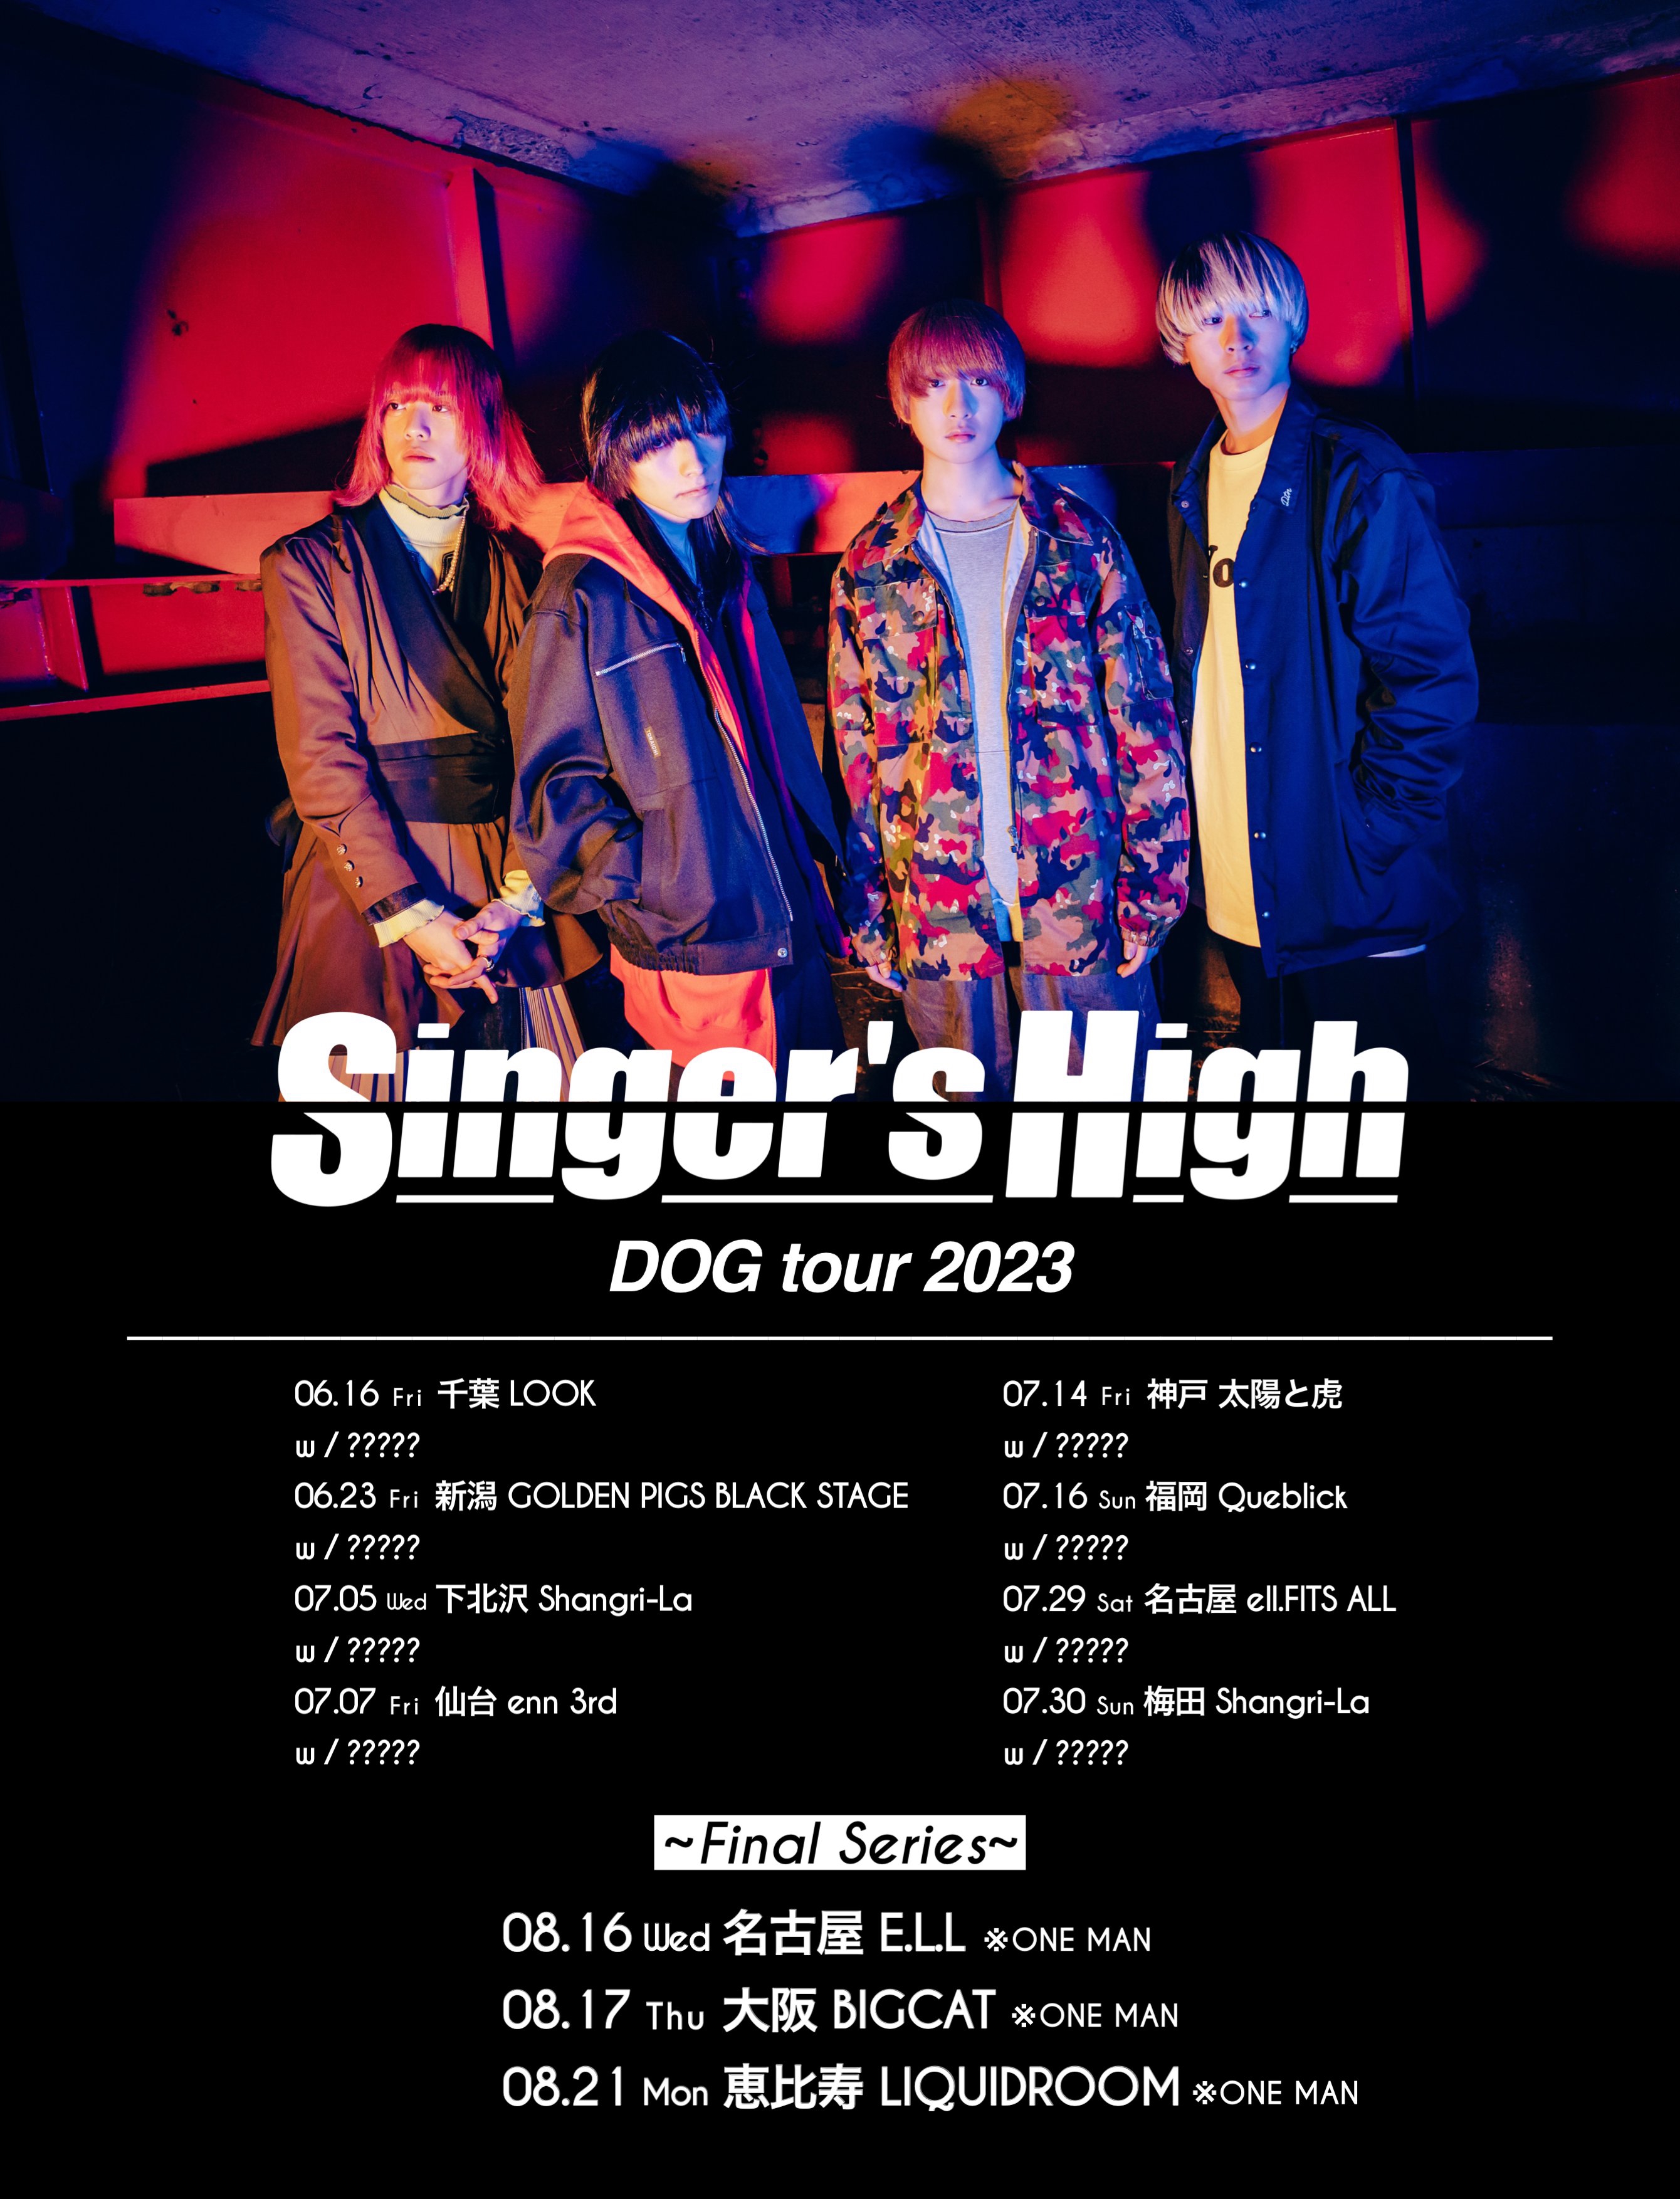 2023/7/5 (WED)【東京】 DOG tour 2023 (下北沢Shangri-La 